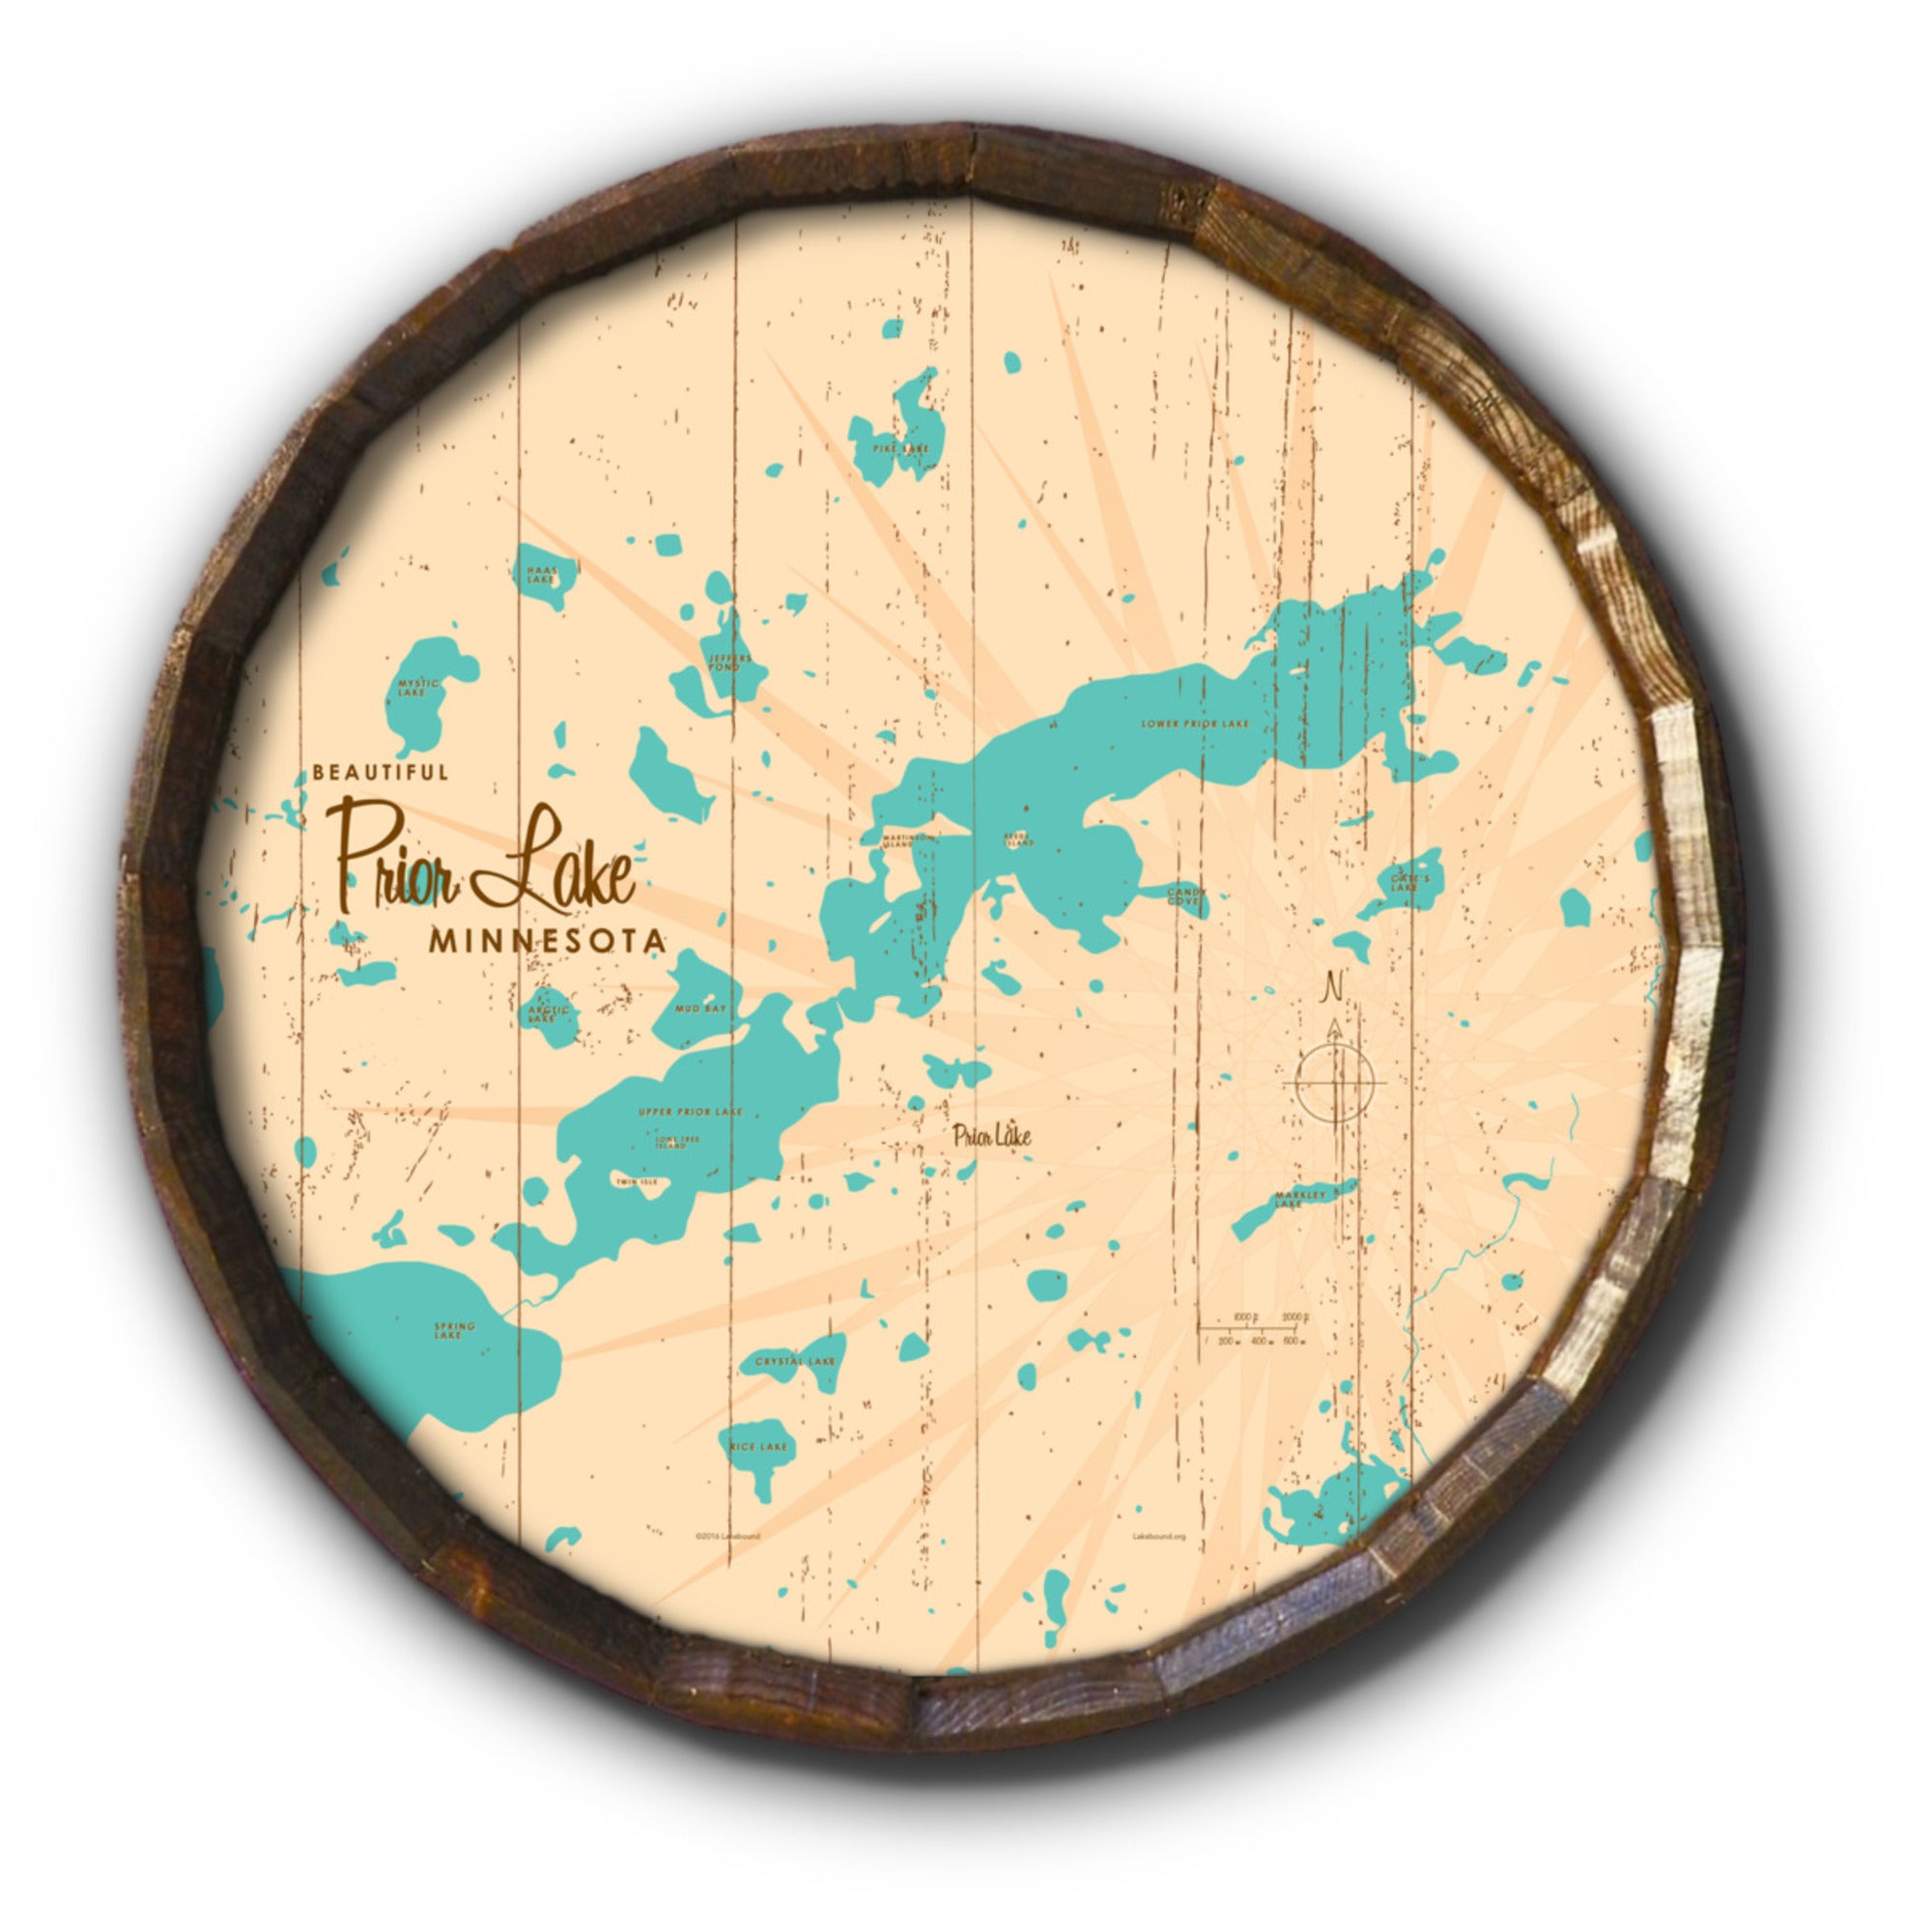 Prior Lake Minnesota, Rustic Barrel End Map Art